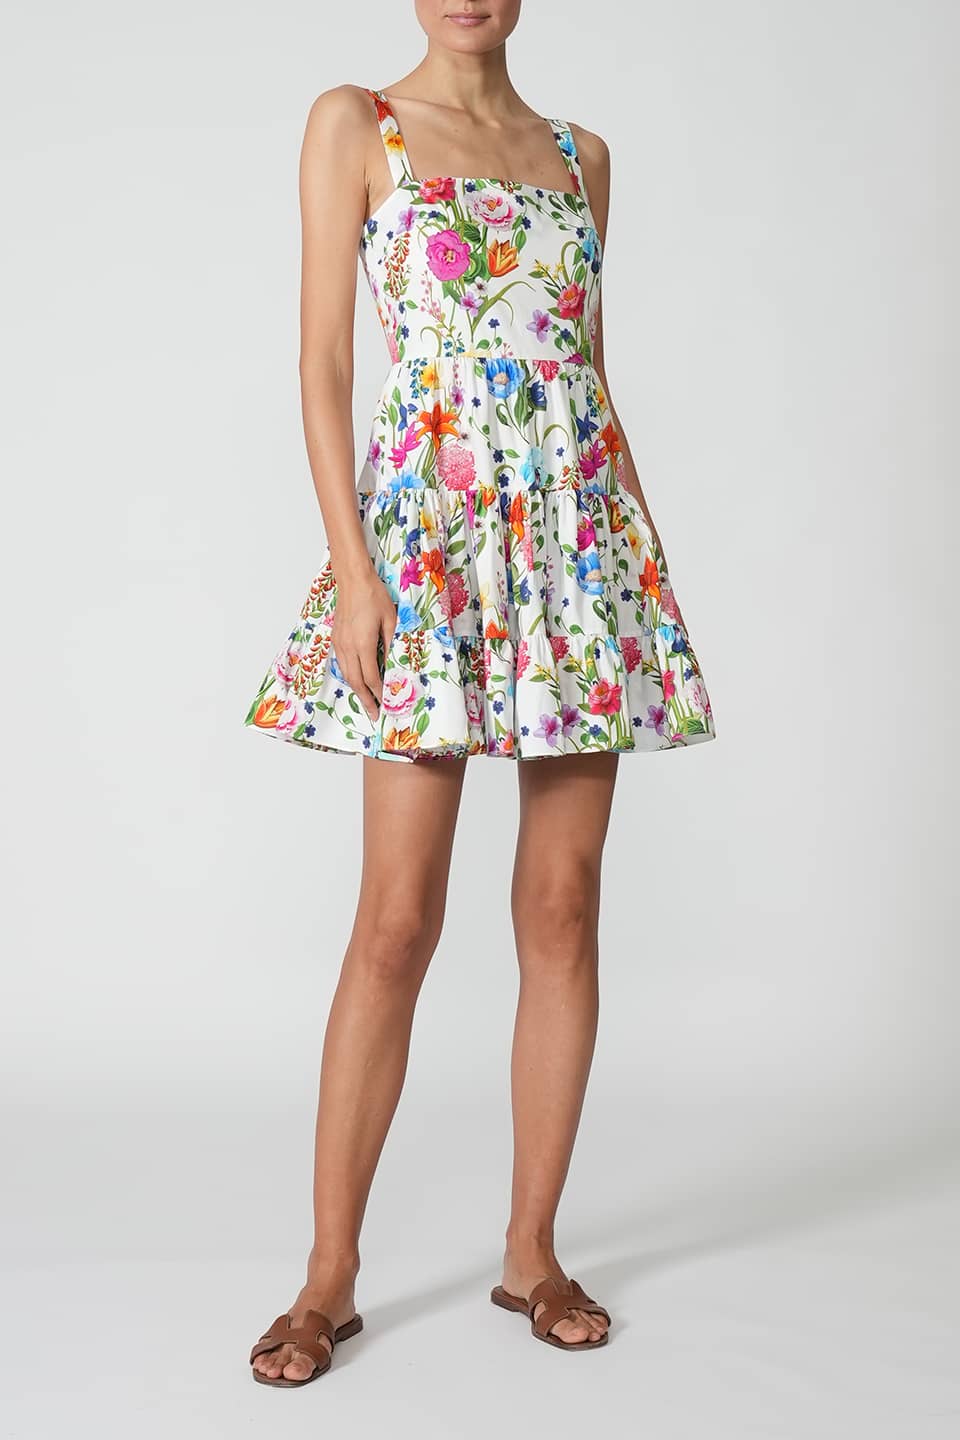 Shop online trendy Multicolor Mini dresses from Borgo de Nor Fashion designer. Product gallery 1